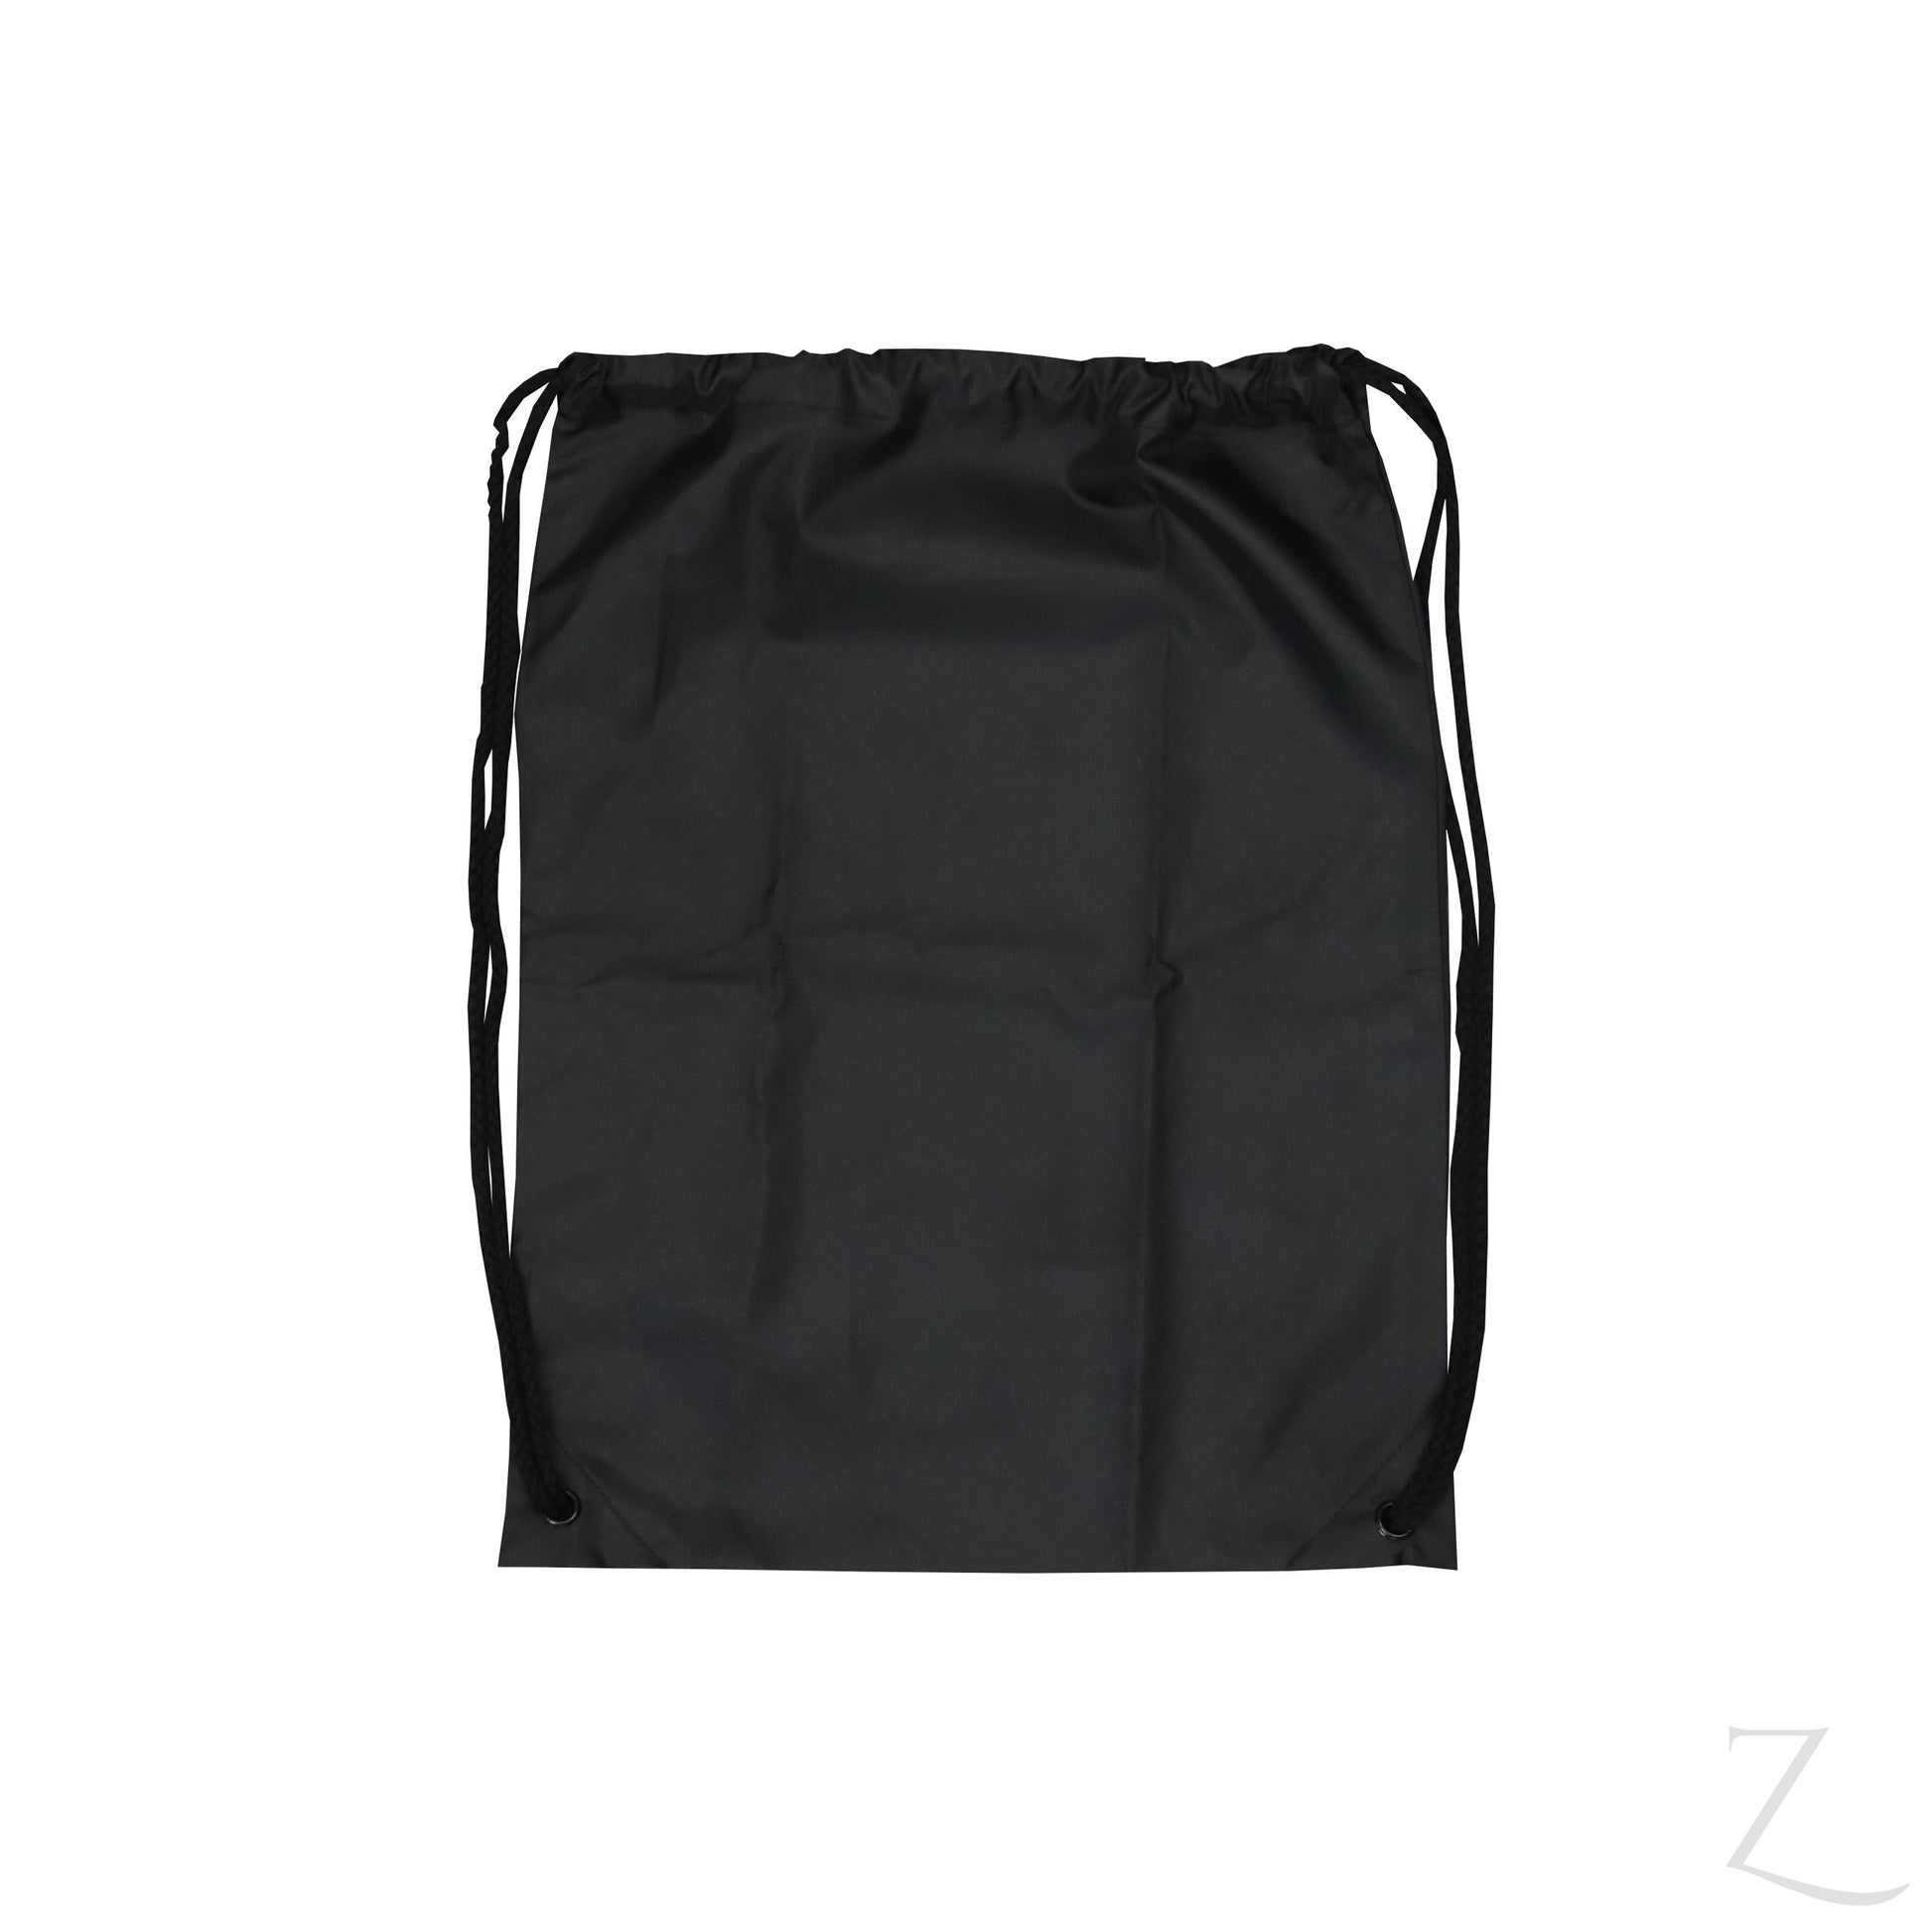 Buy-Black Swim bag-Online-in South Africa-on Zalemart